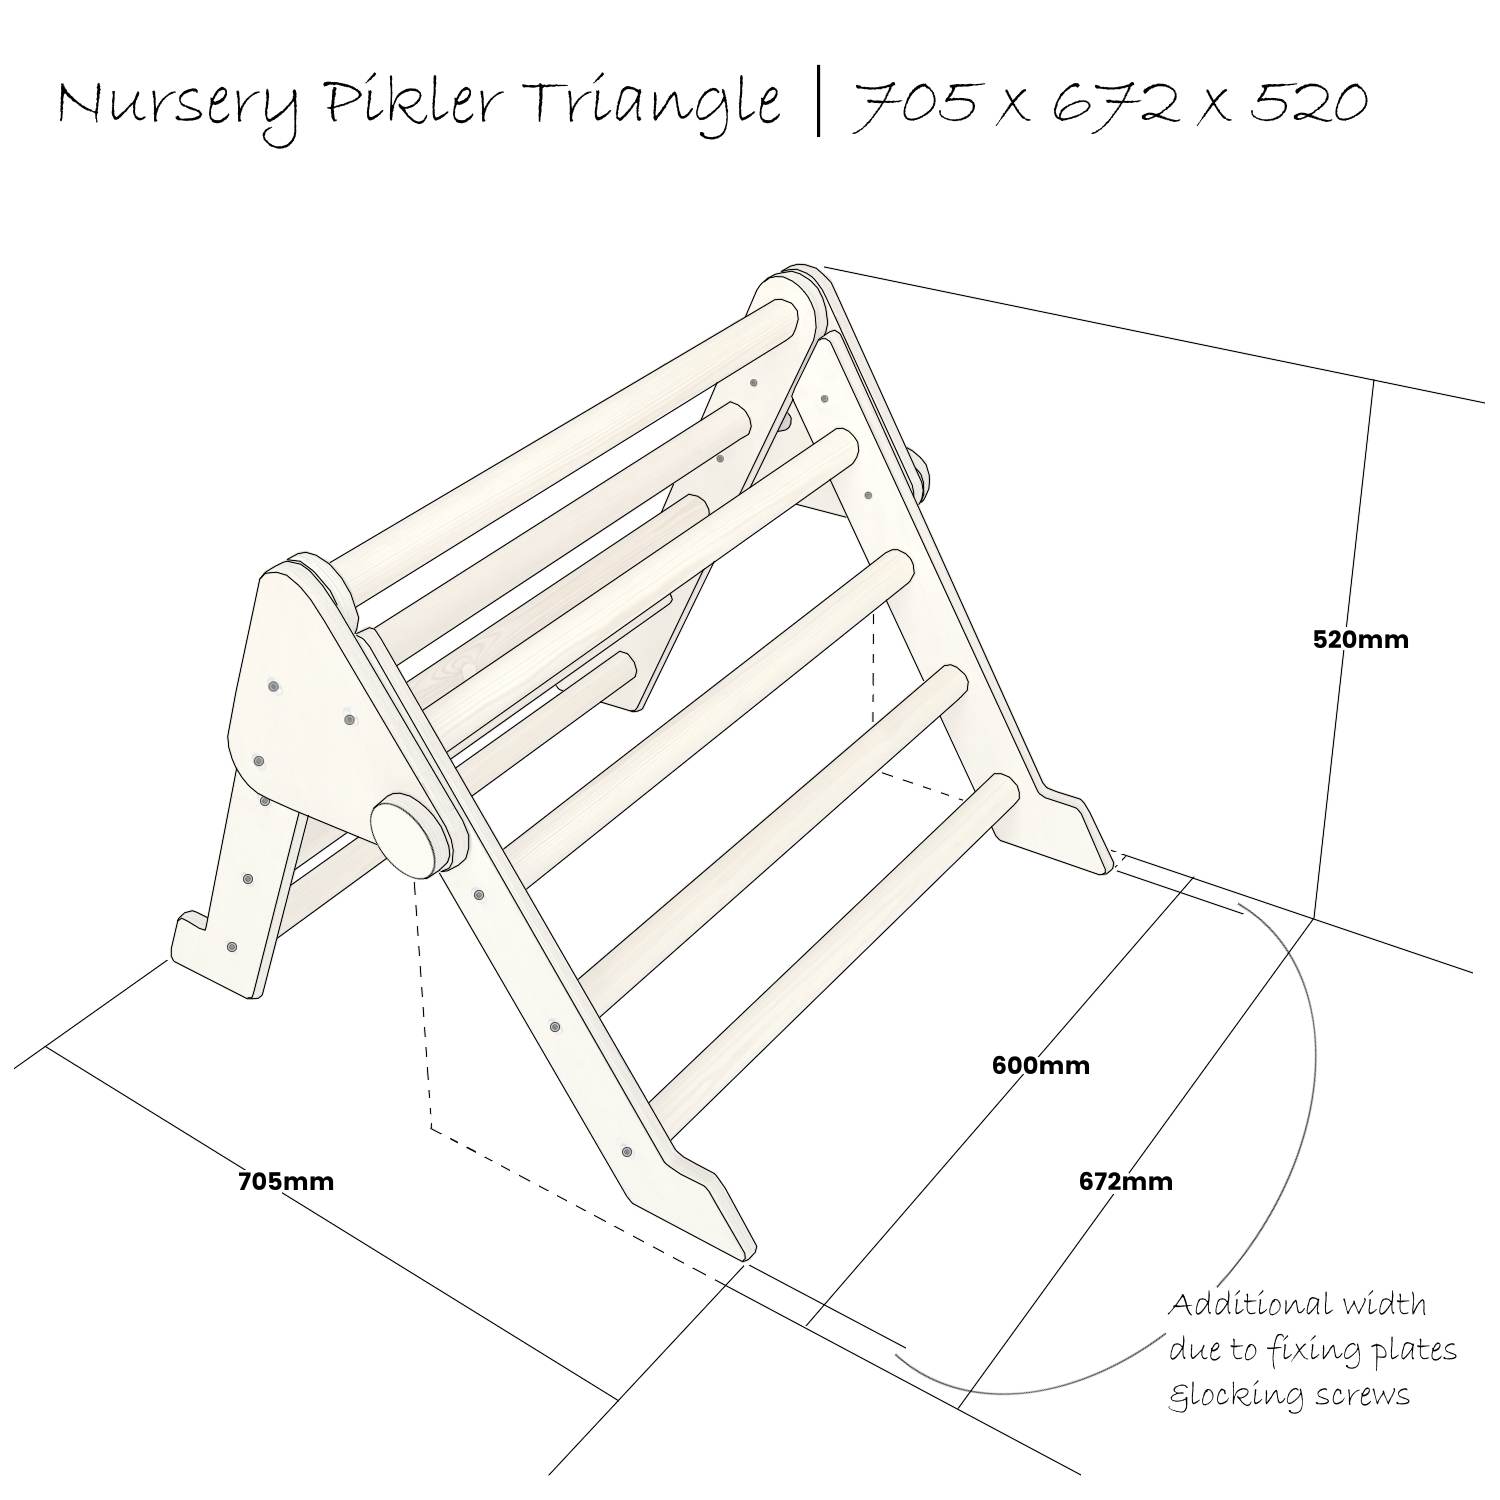 Nursery Pikler Triangle Schematic 705x672x520